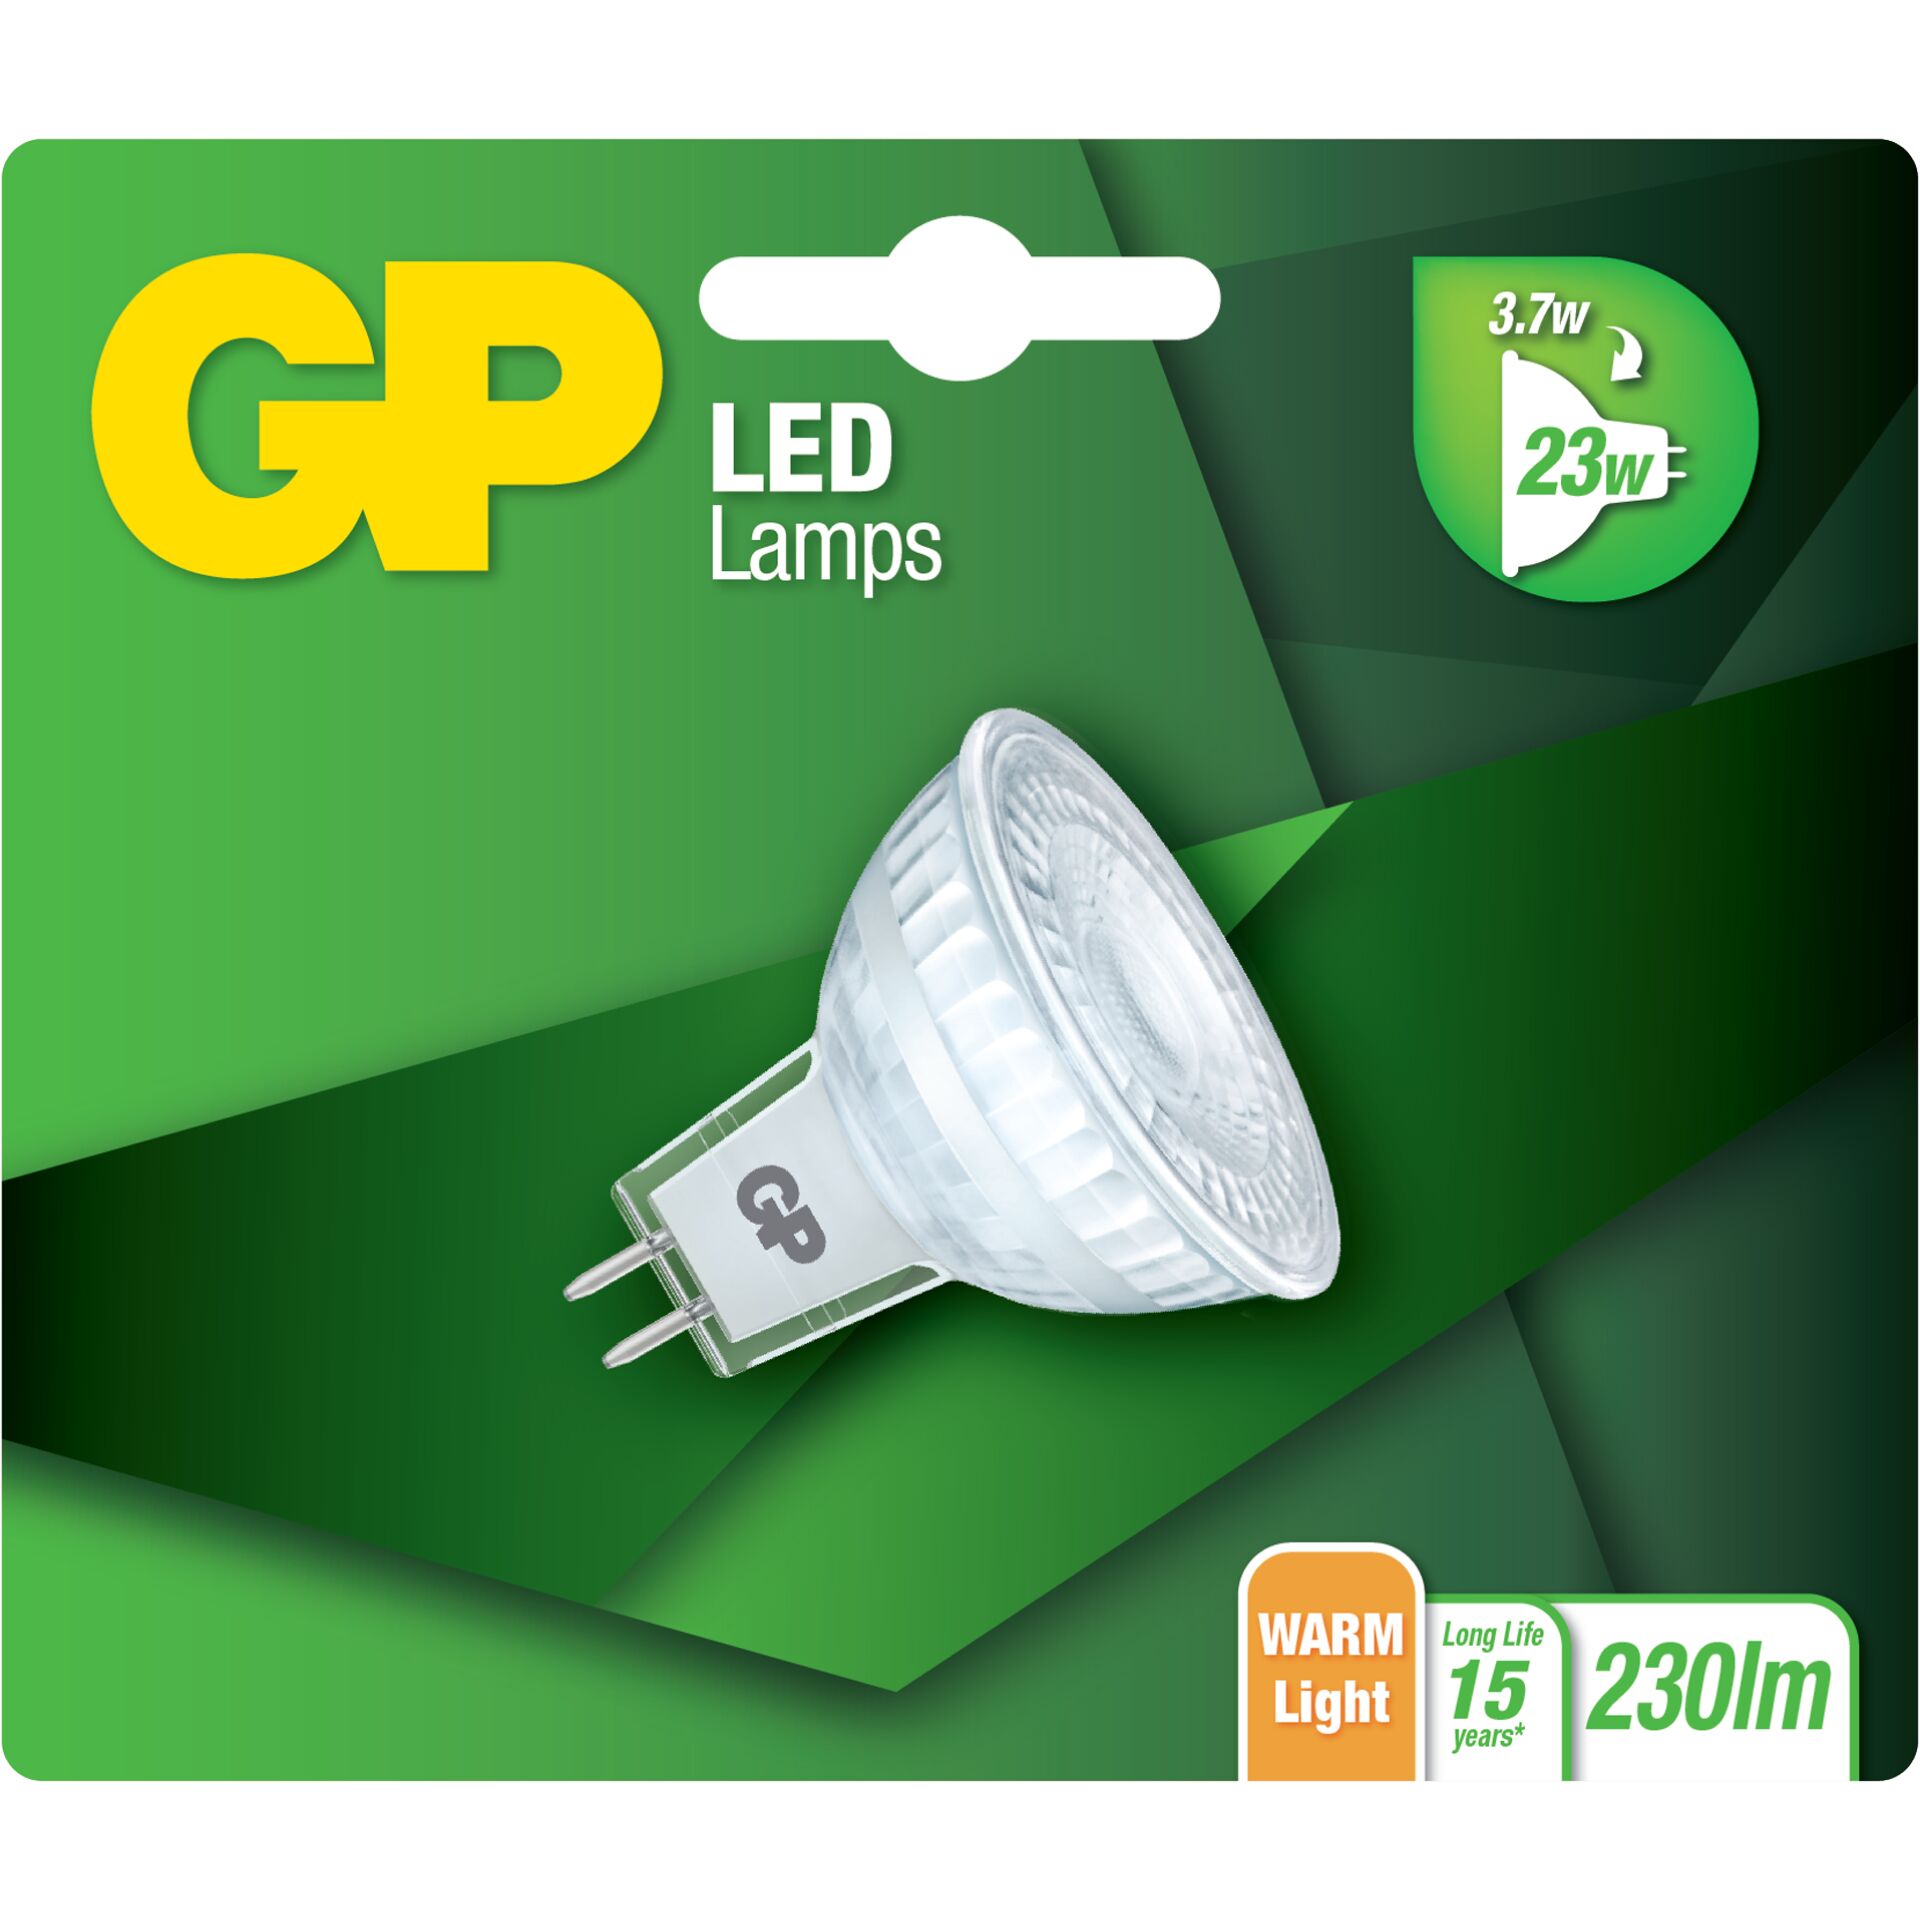 GP Lighting LED GU5.3 MR16 Refl. 3,7W (23W) 230 lm      GP 0